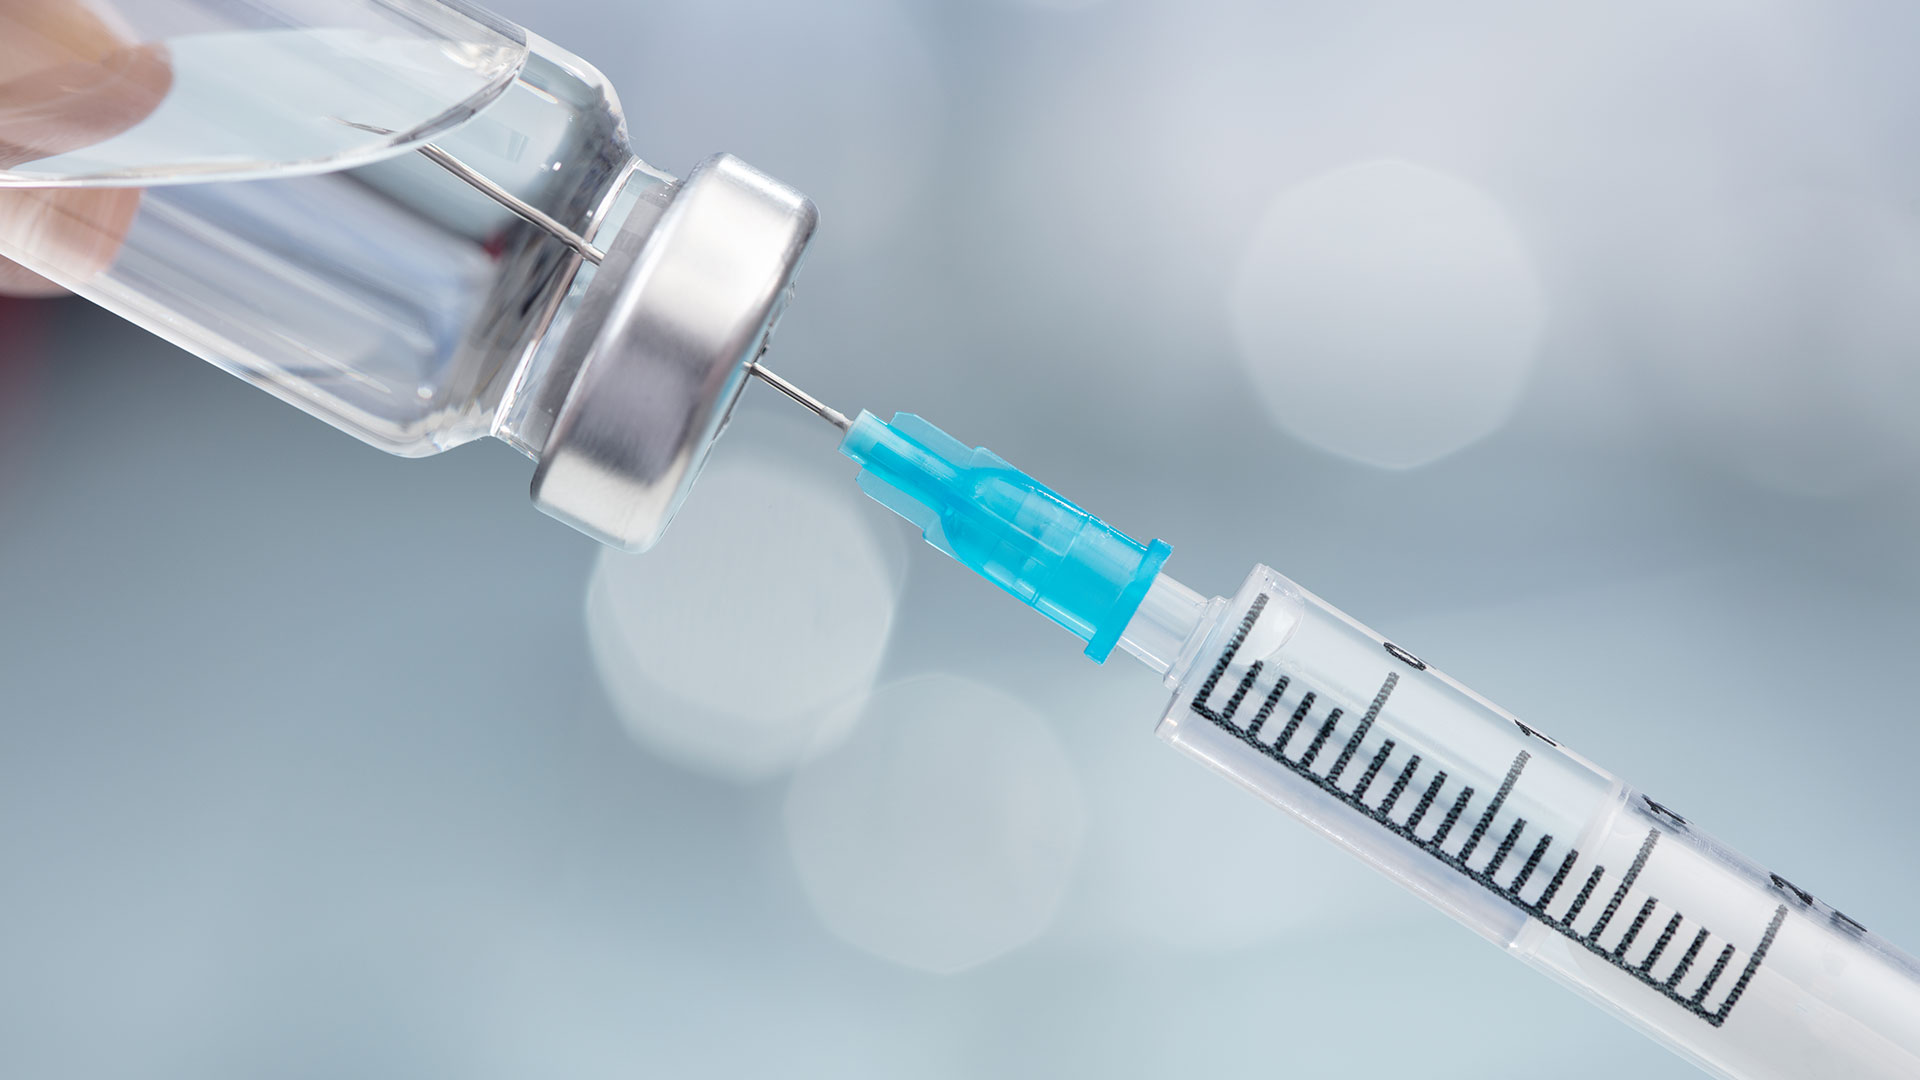 Insurance risks of COVID-19 vaccines